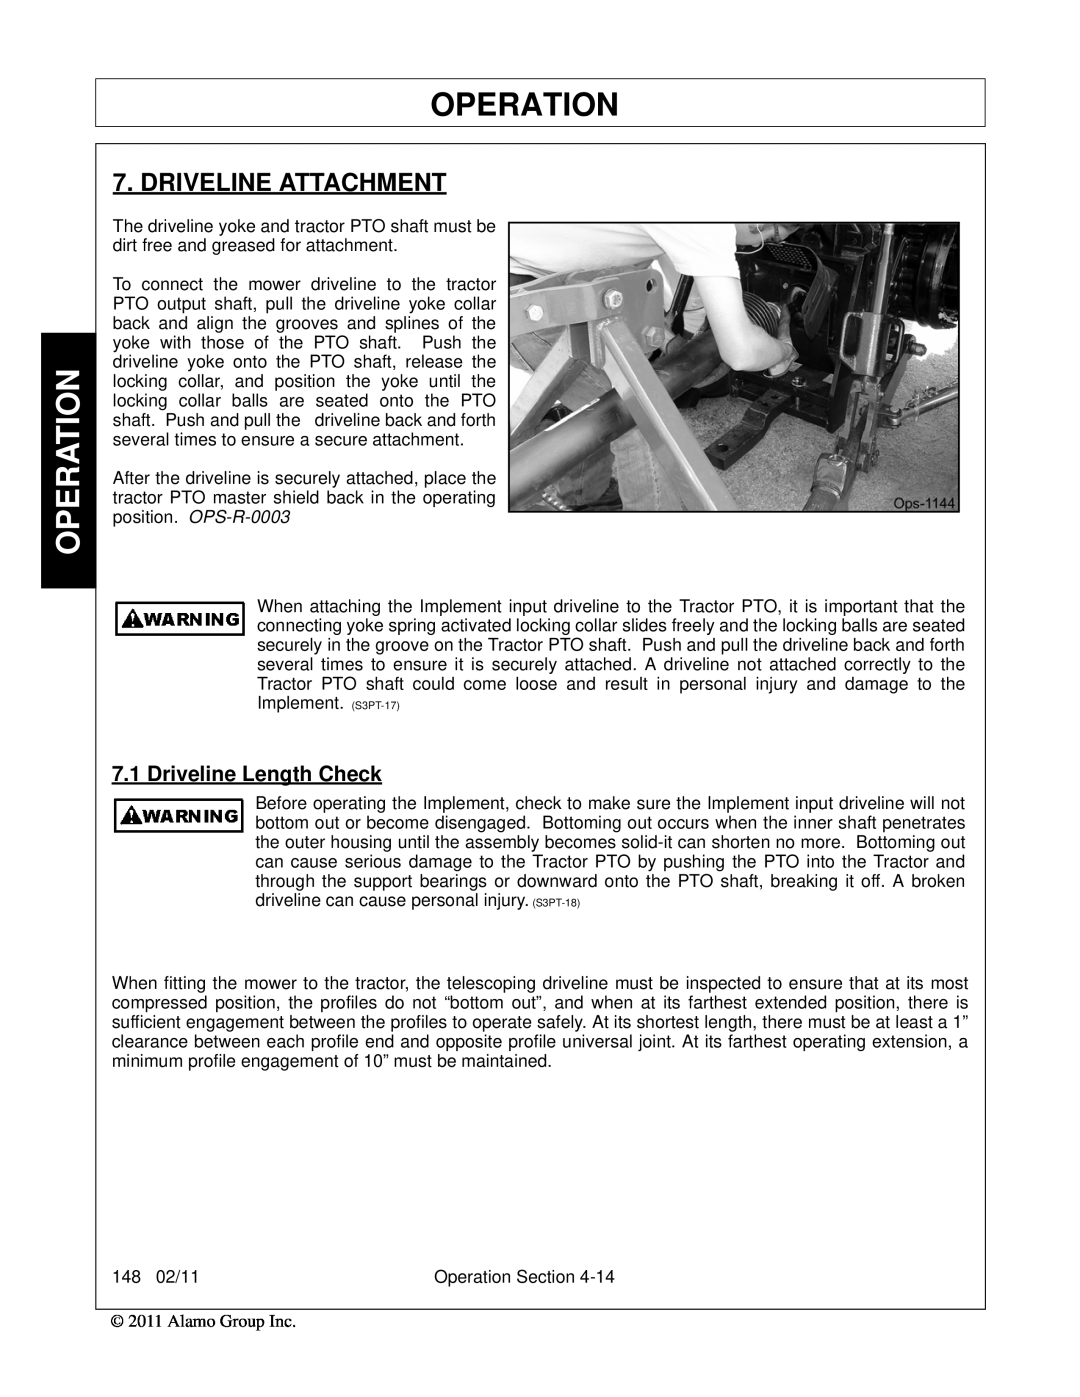 Rhino Mounts 148 manual Driveline Attachment, Operation, Driveline Length Check 